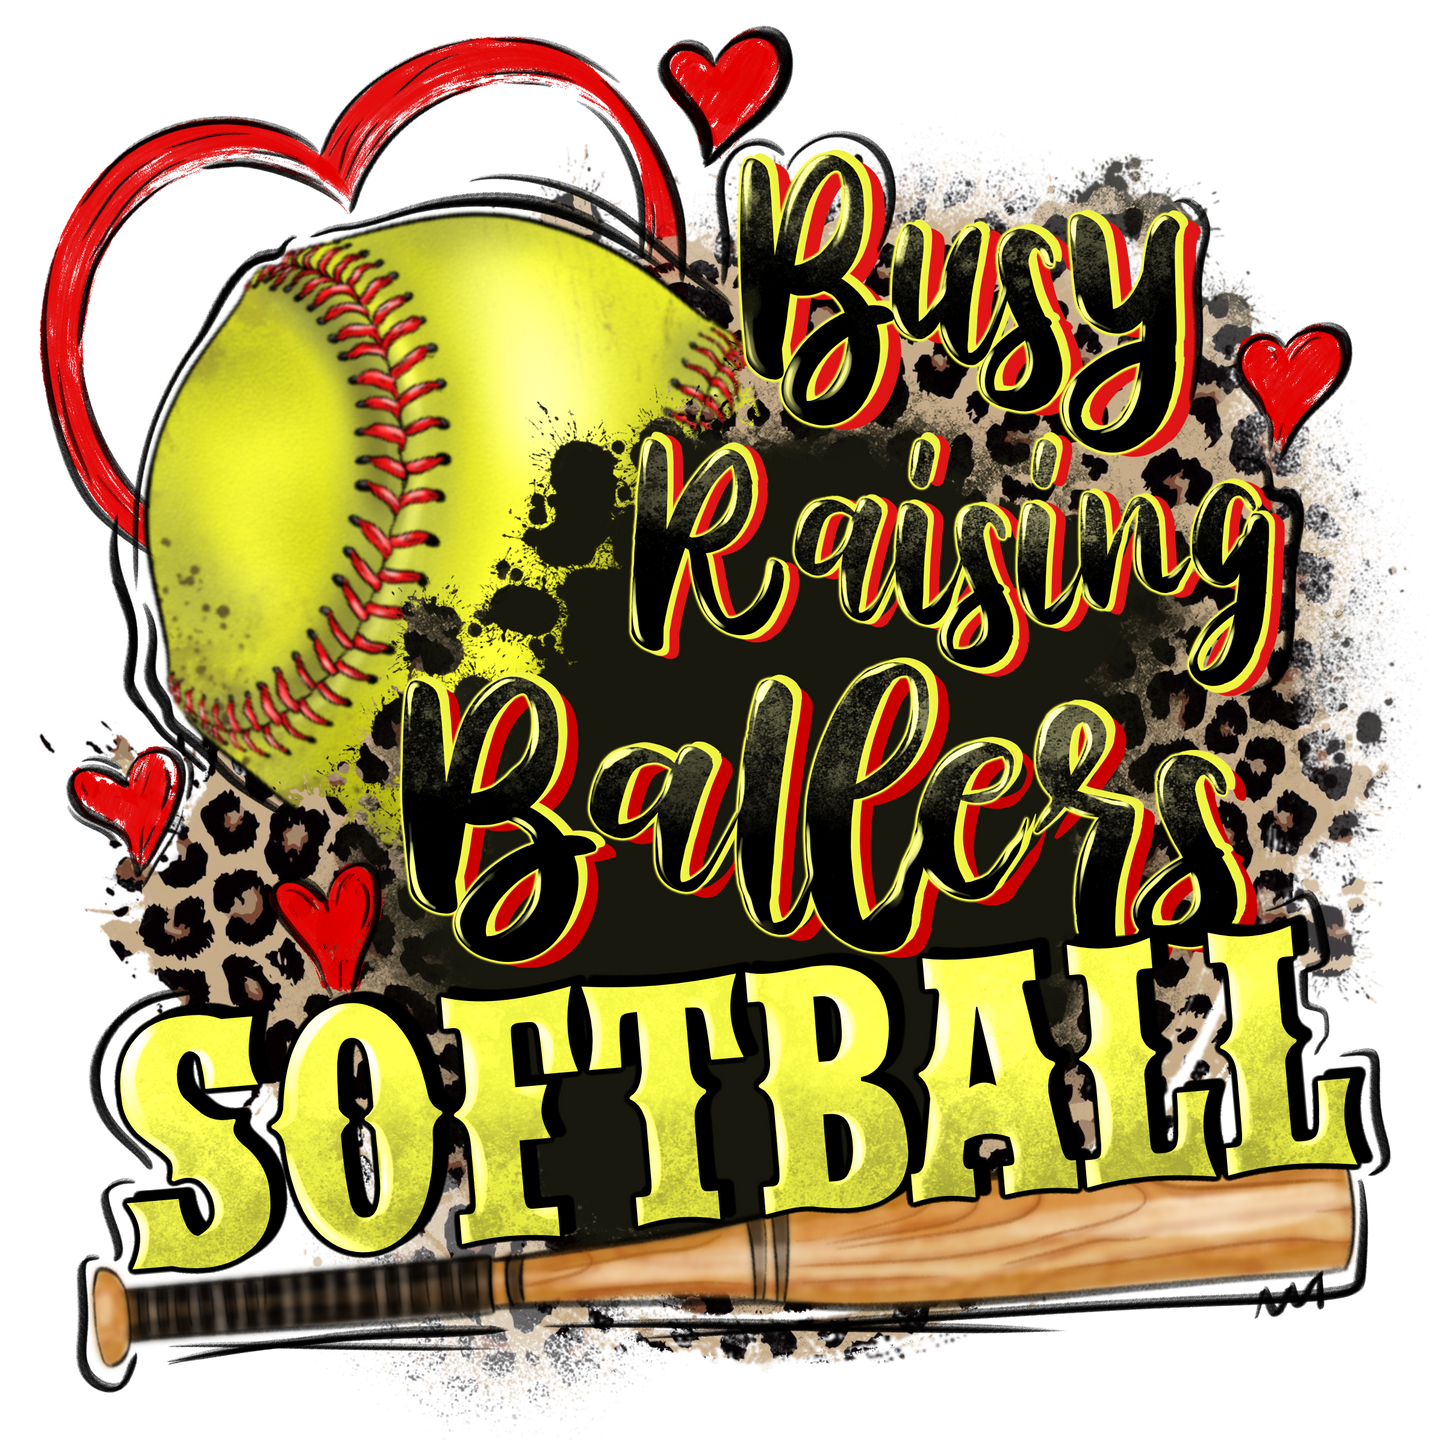 Busy Raising Ballers (softball)